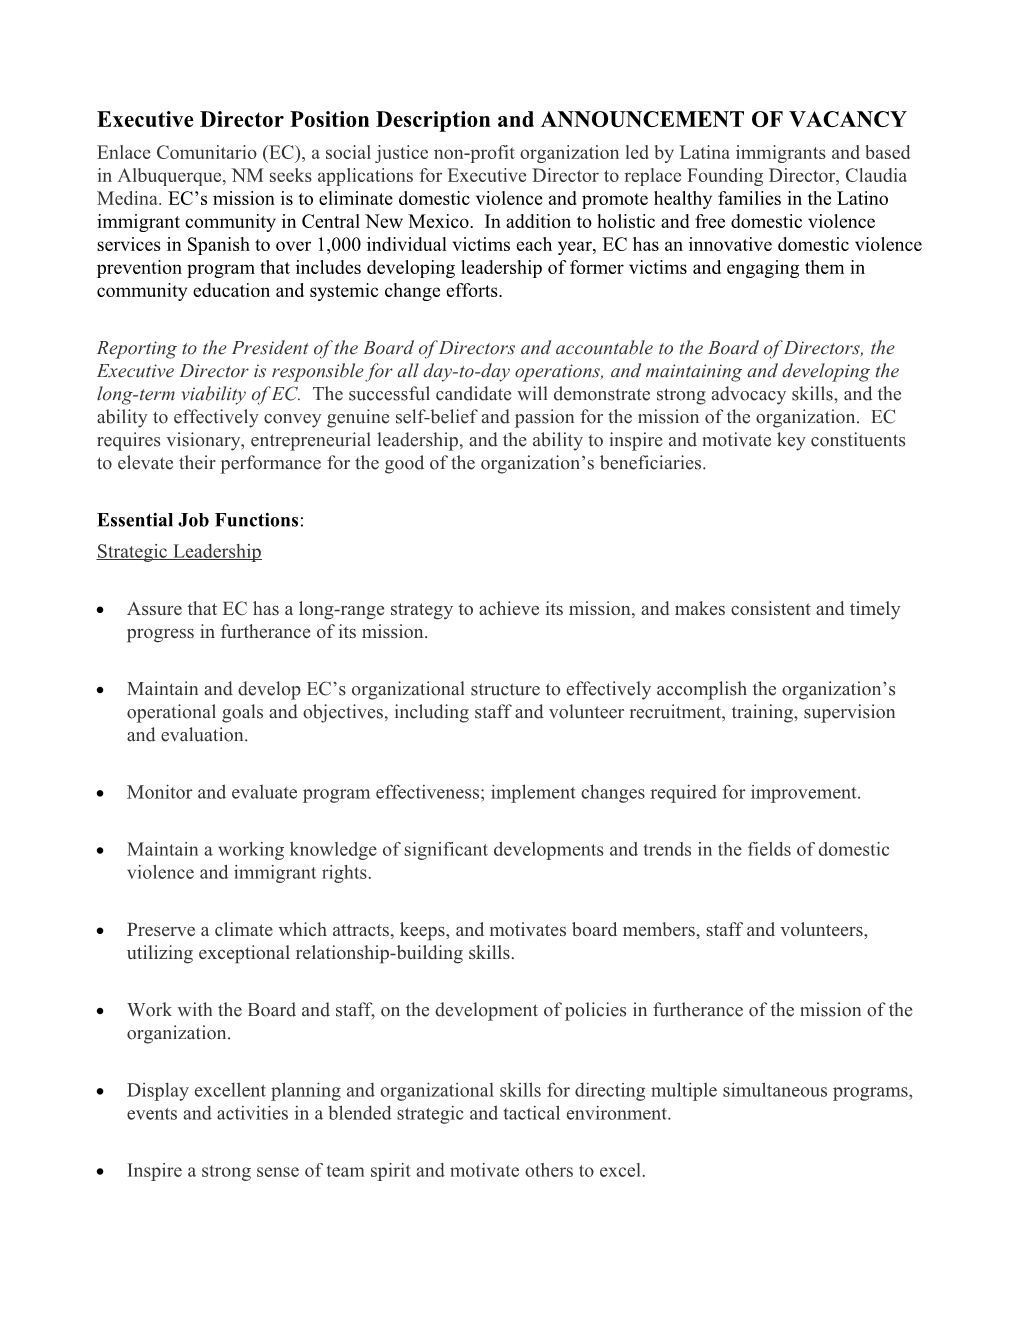 Executive Director Position Description and ANNOUNCEMENT of VACANCY